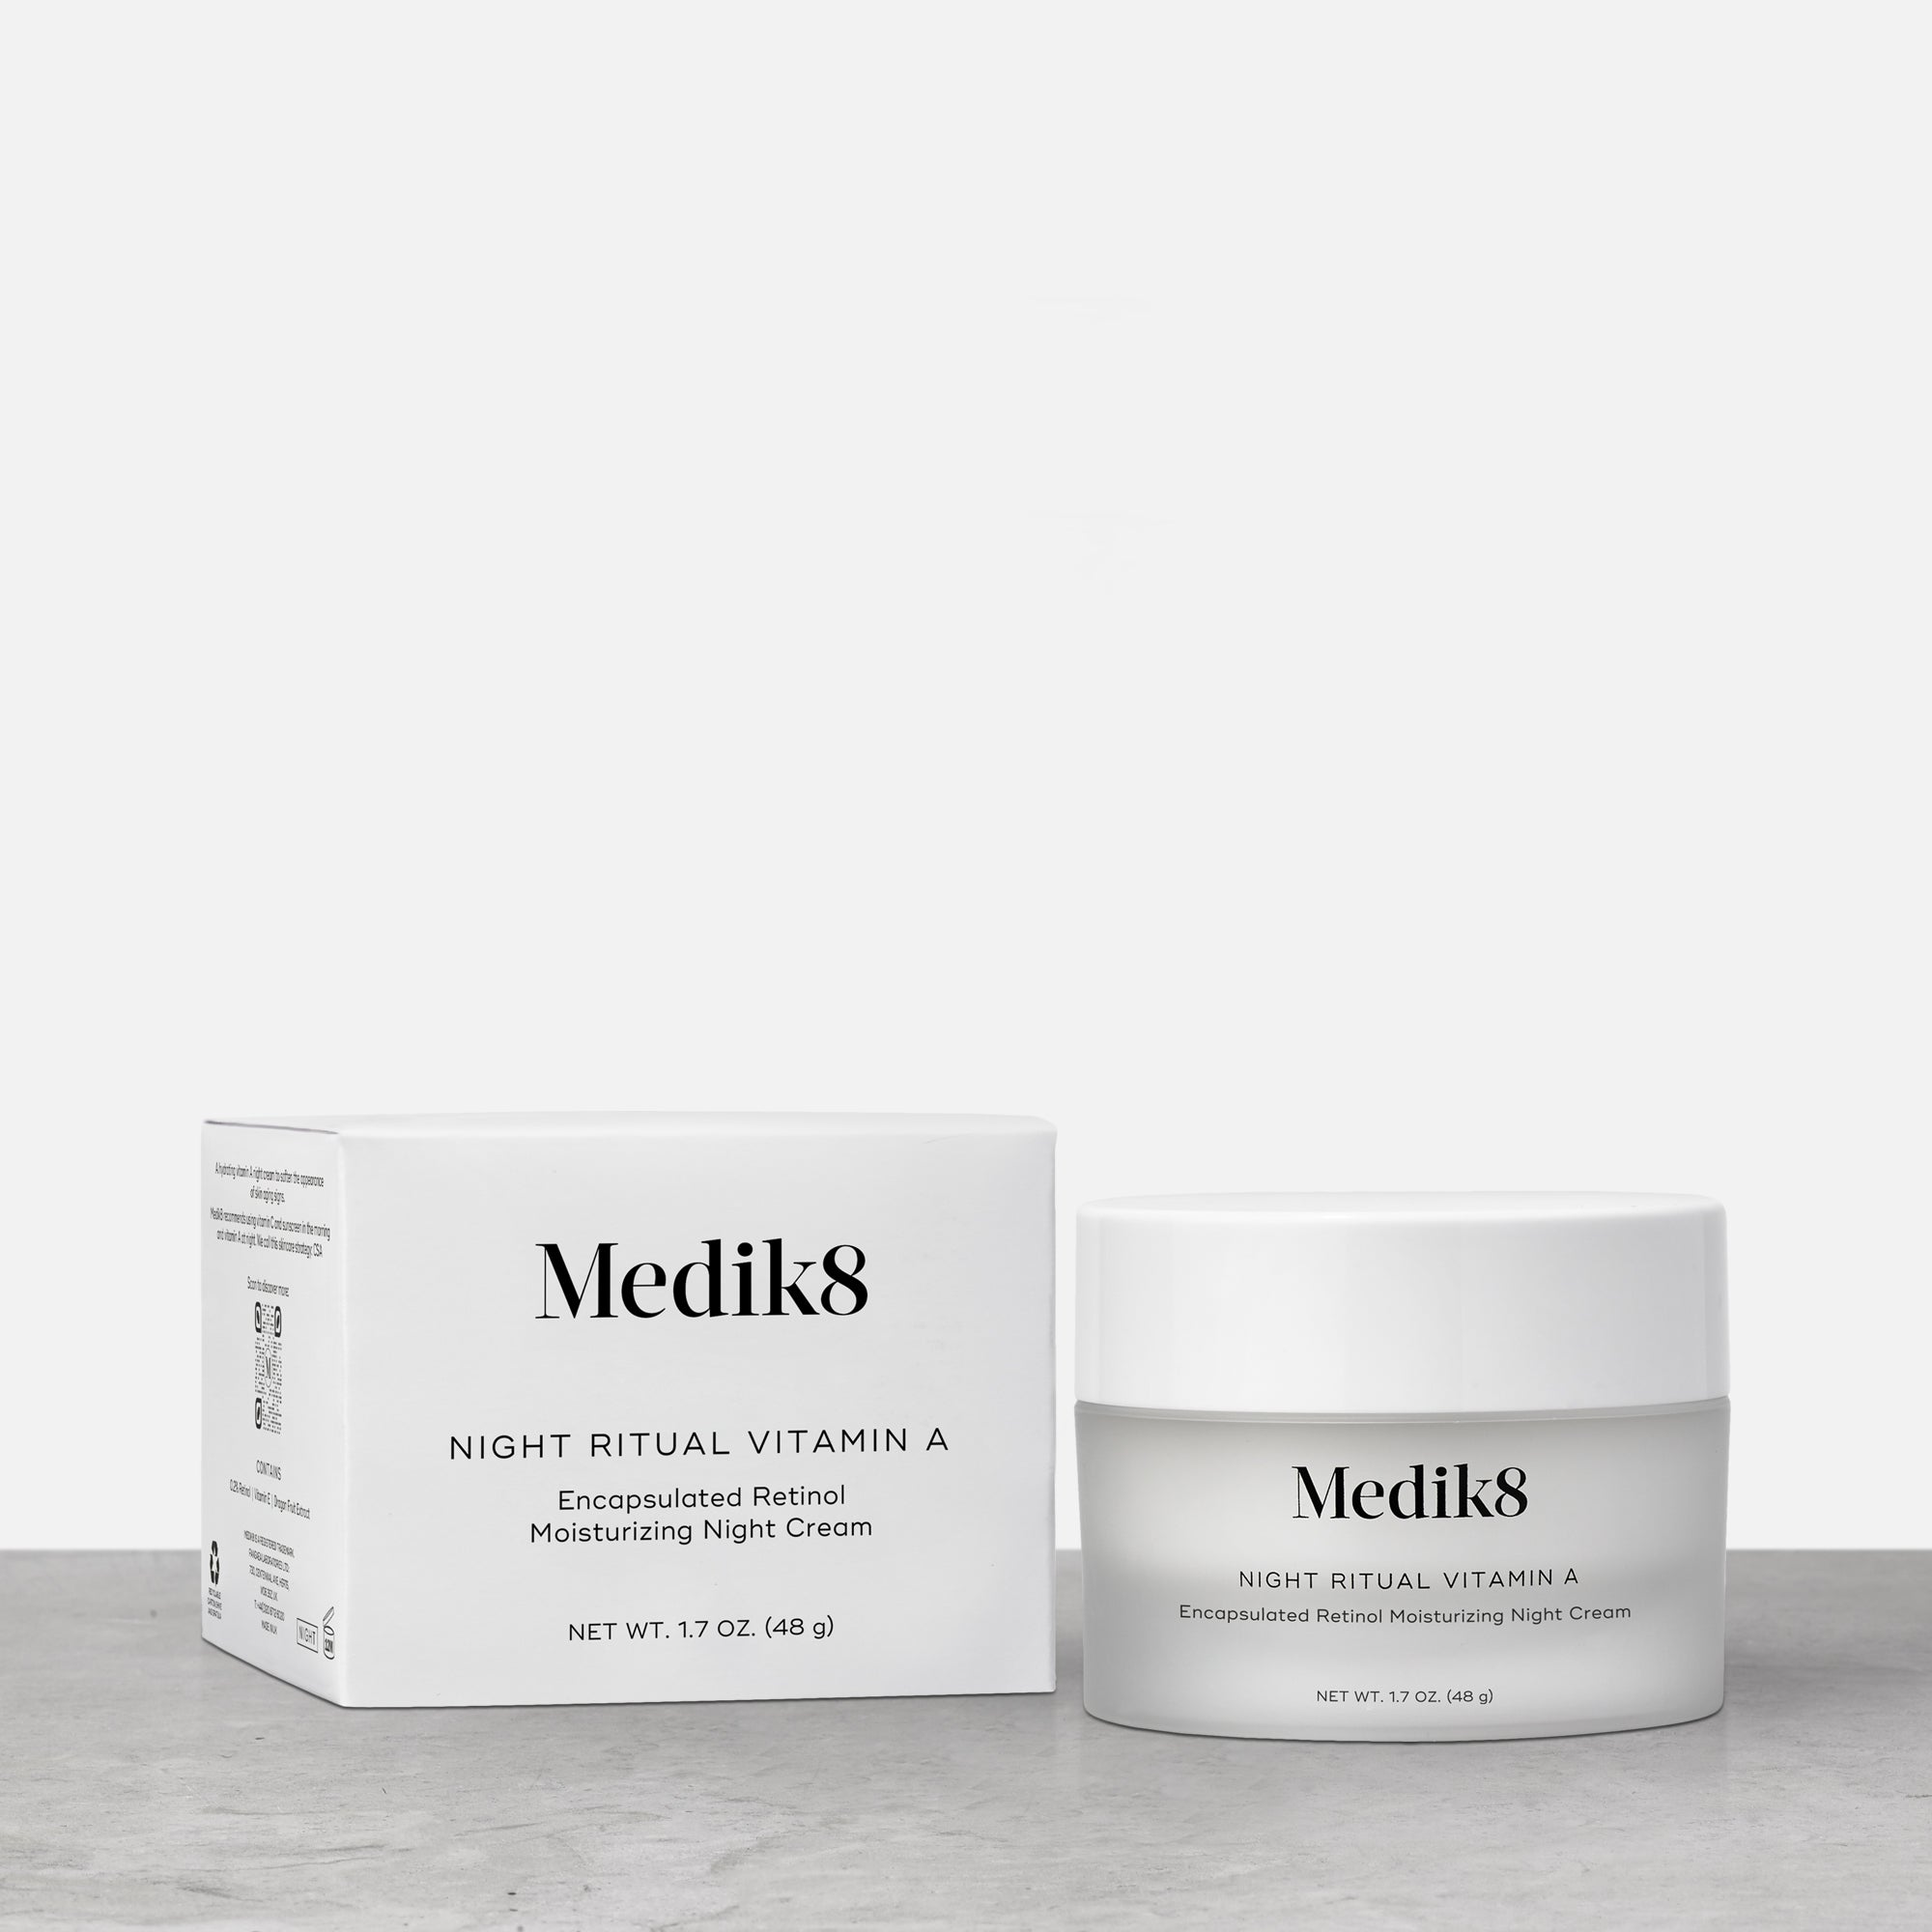 Night Ritual Vitamin A by Medik8. An encapsulated retinol moisturizing night cream.